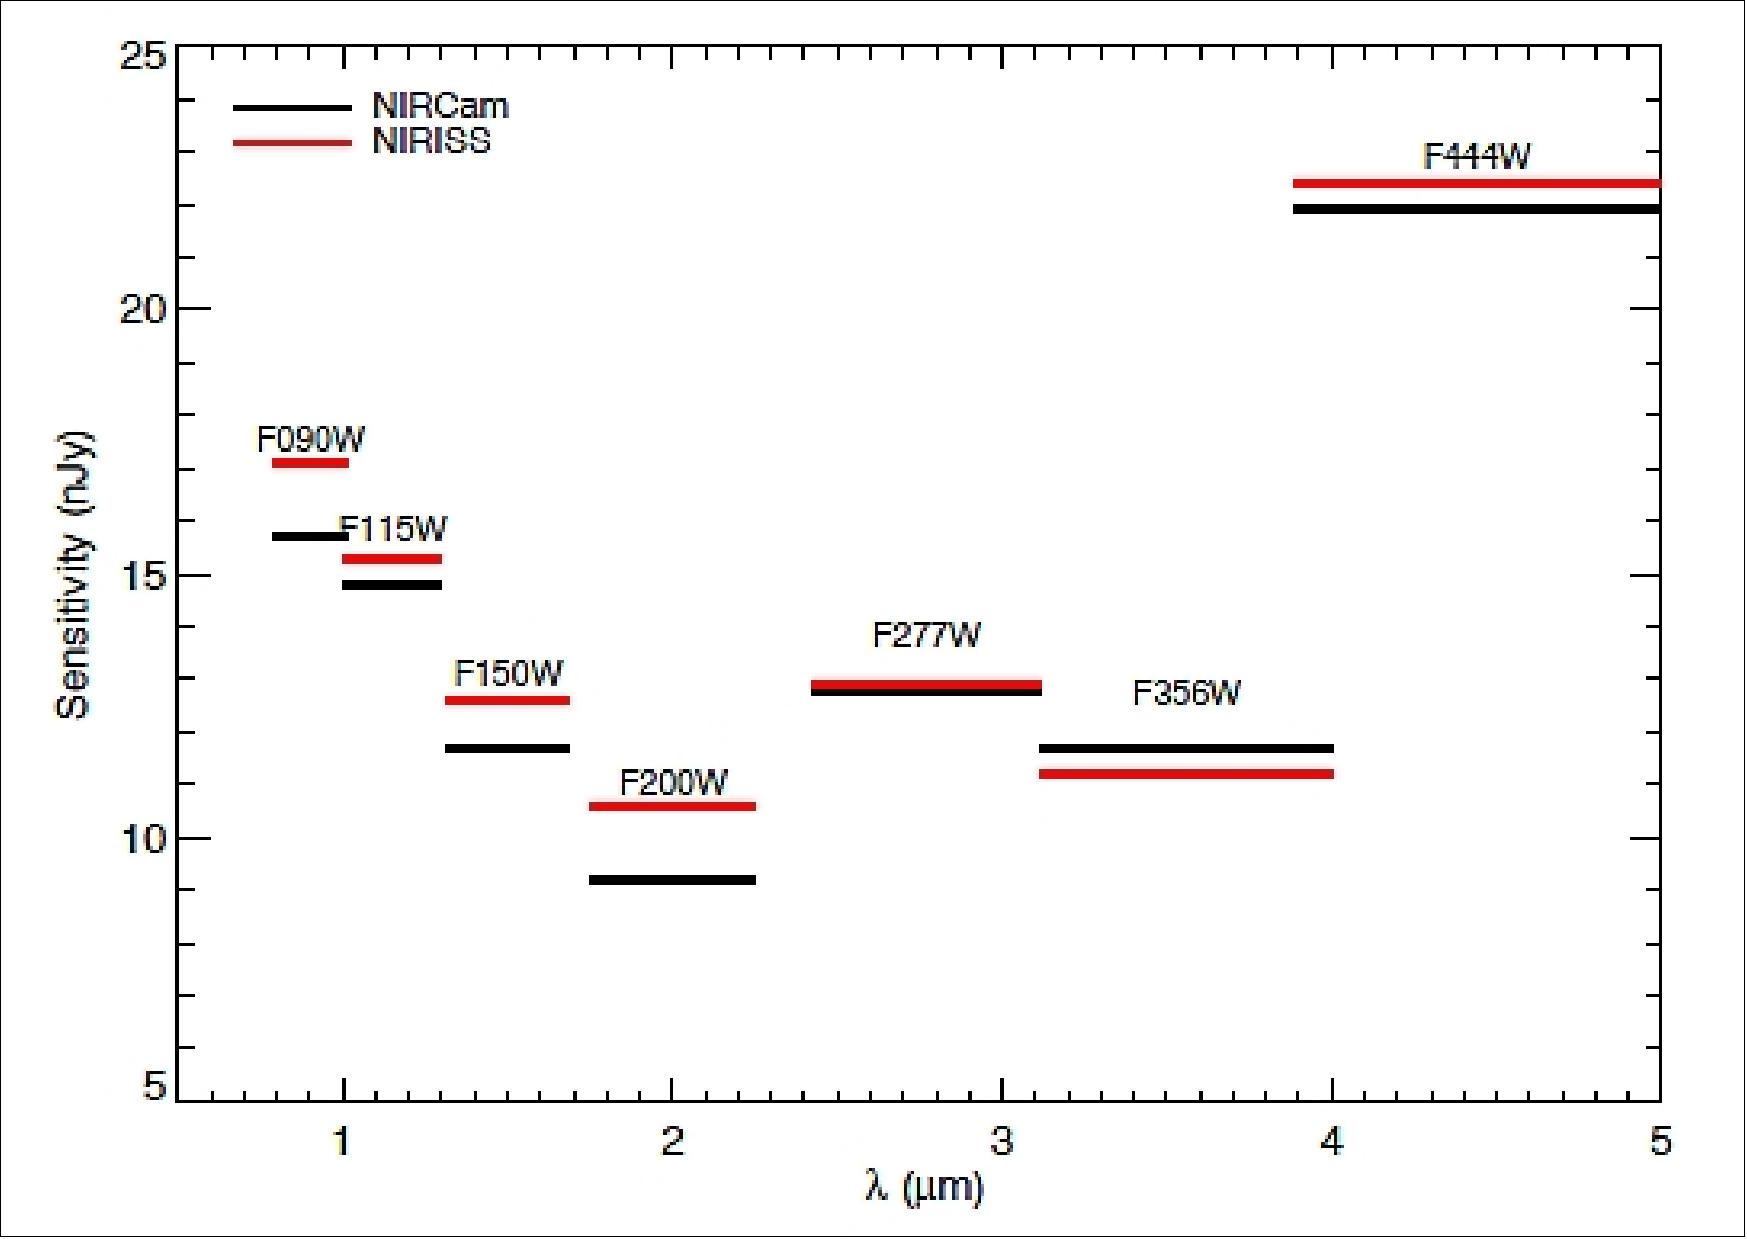 Figure 92: Predicted NIRISS broadband imaging sensitivity (10σ, 104s) compared to NIRCam (image credit: CSA, COM DEV Ltd.)